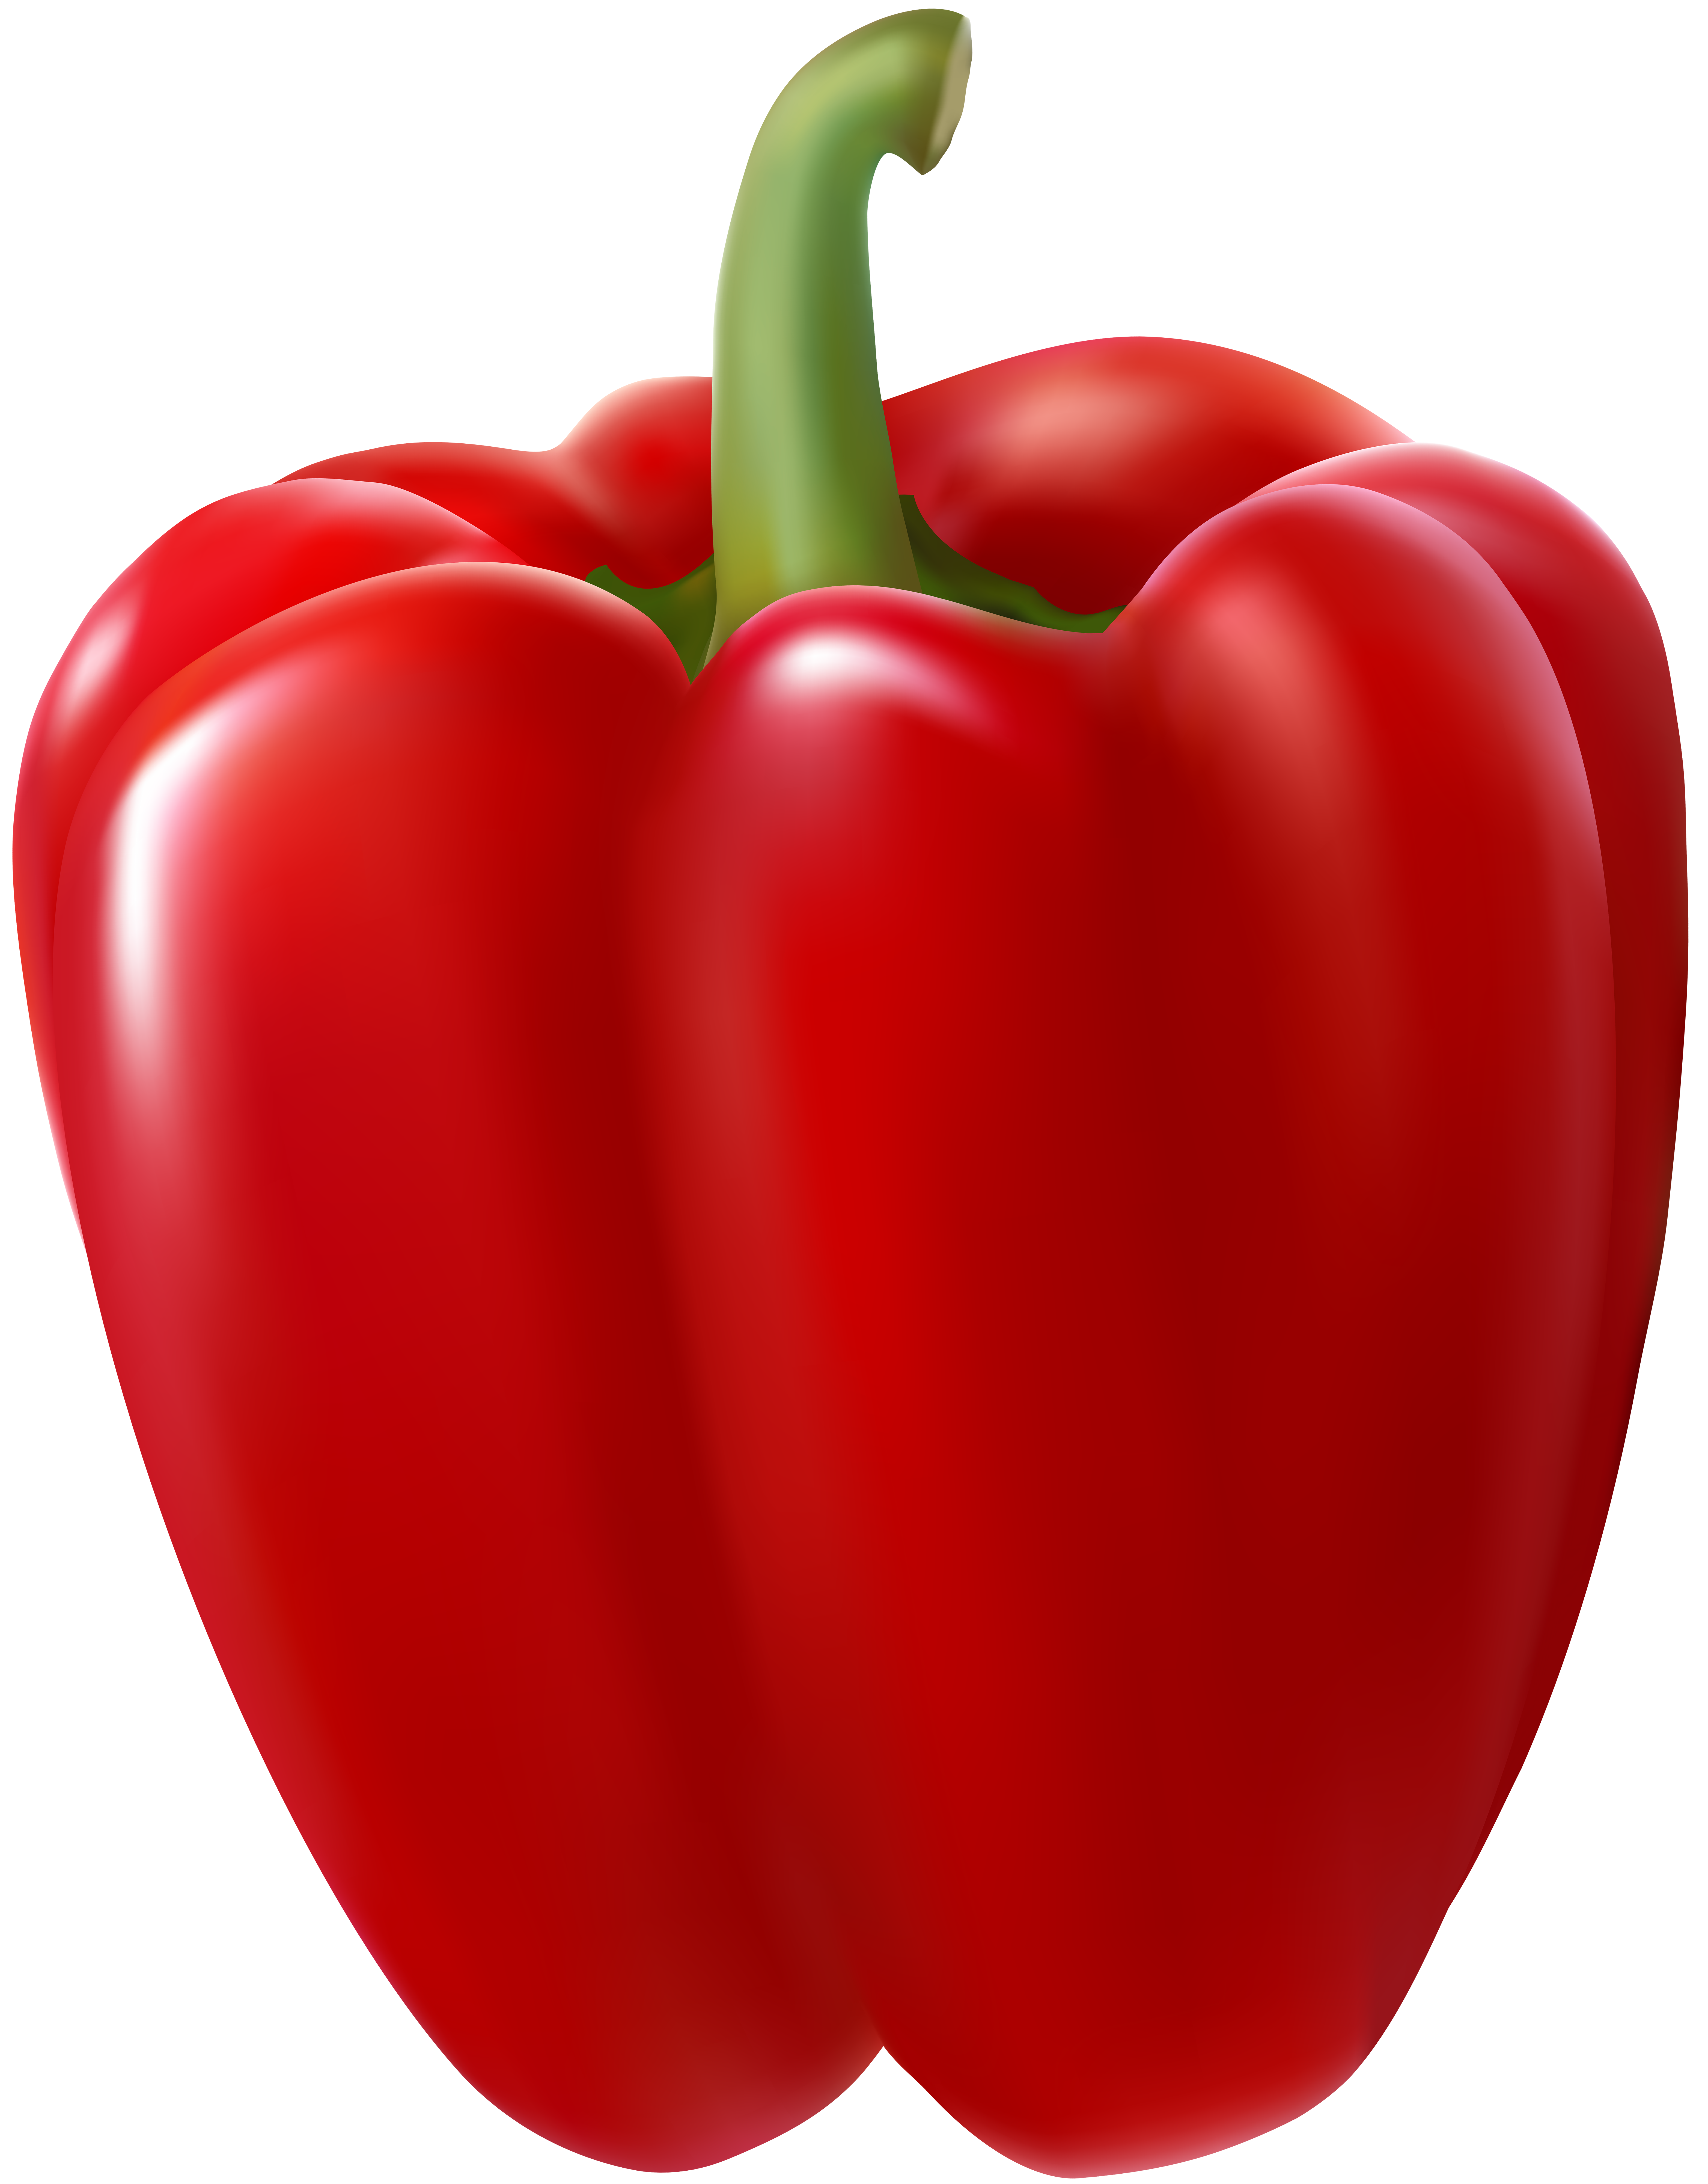 Red Bell Pepper Transparent Clip Art Image.